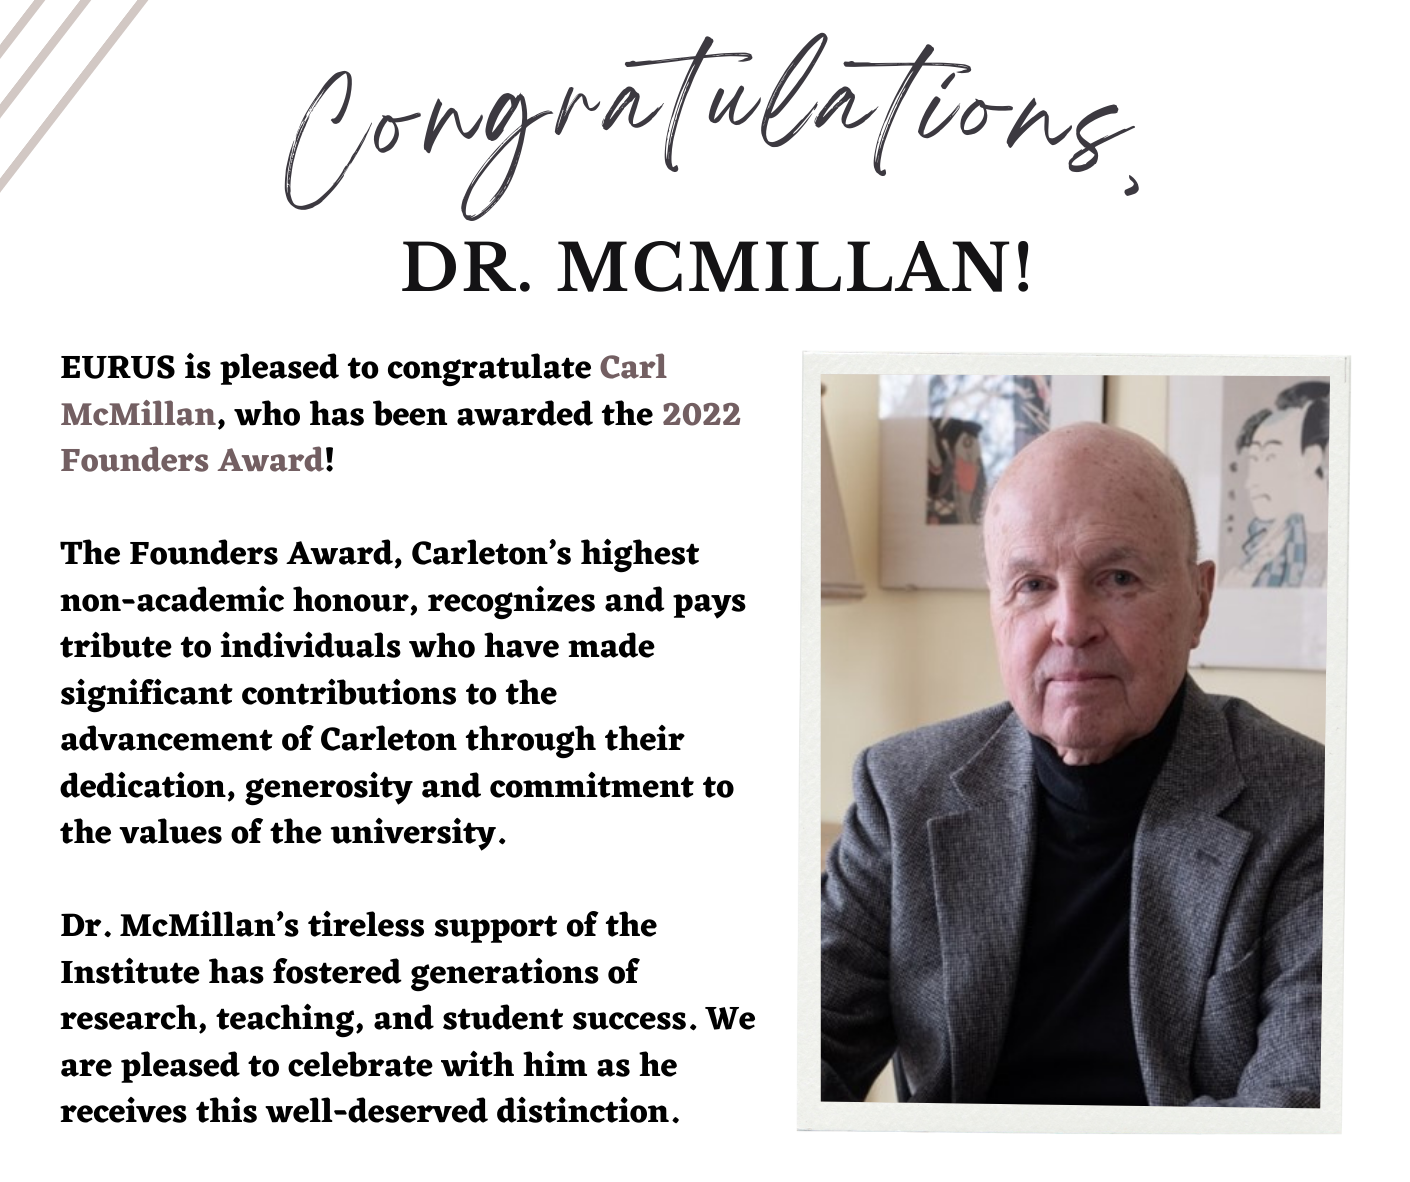 Carl McMillan awarded the 2022 Founders Award